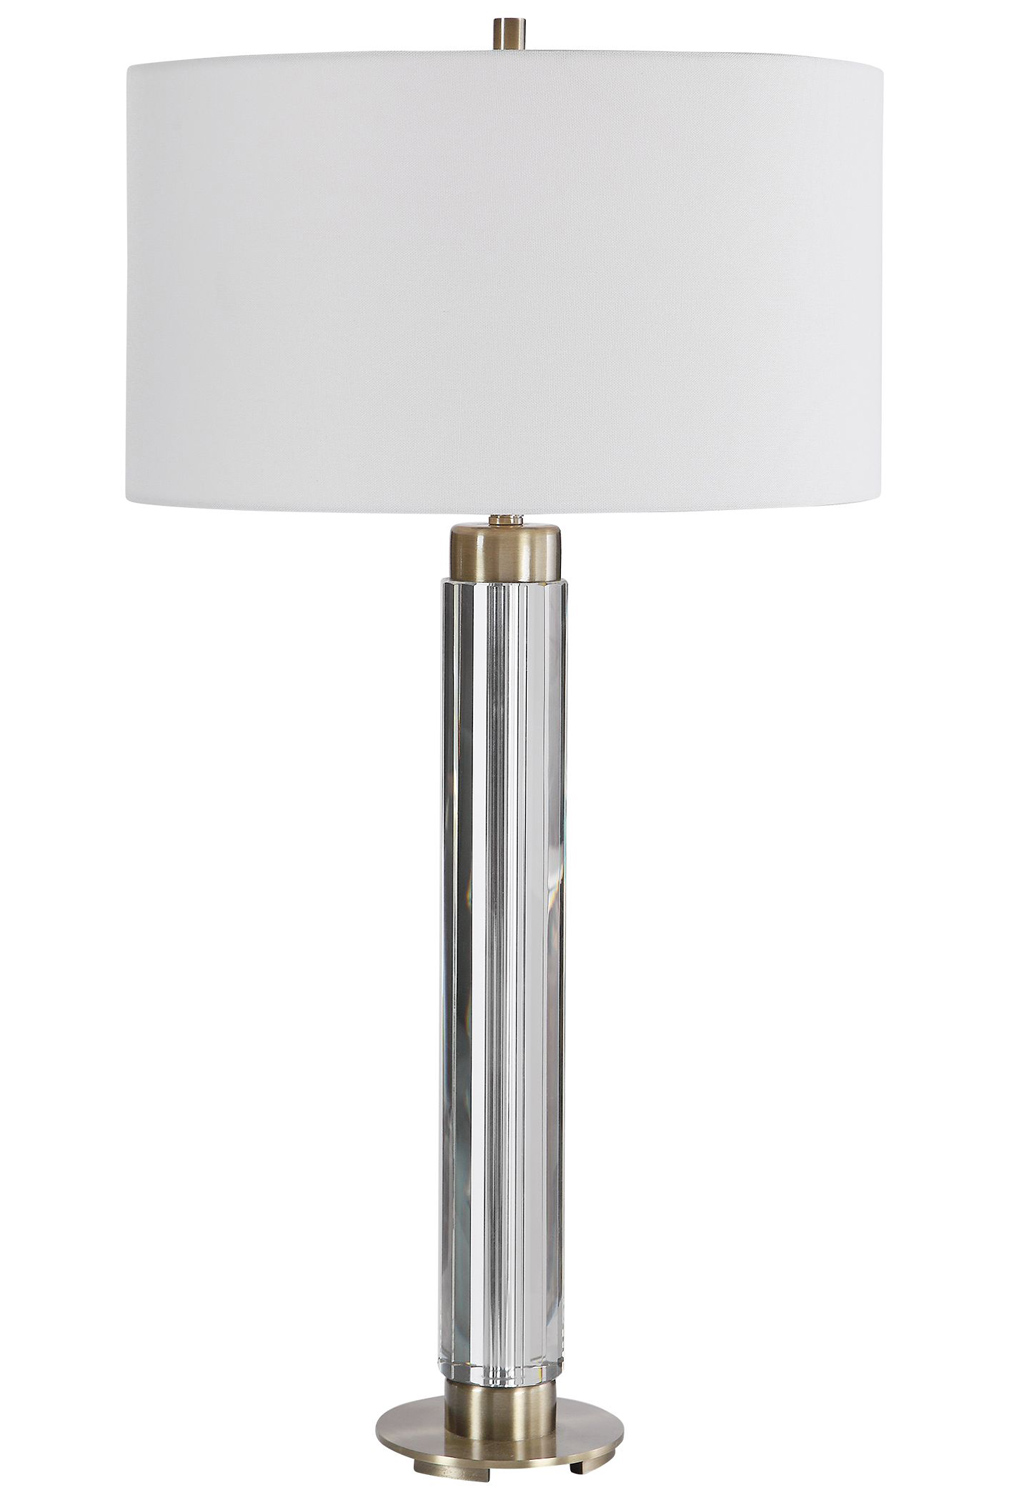 Uttermost Davies Modern Table Lamp